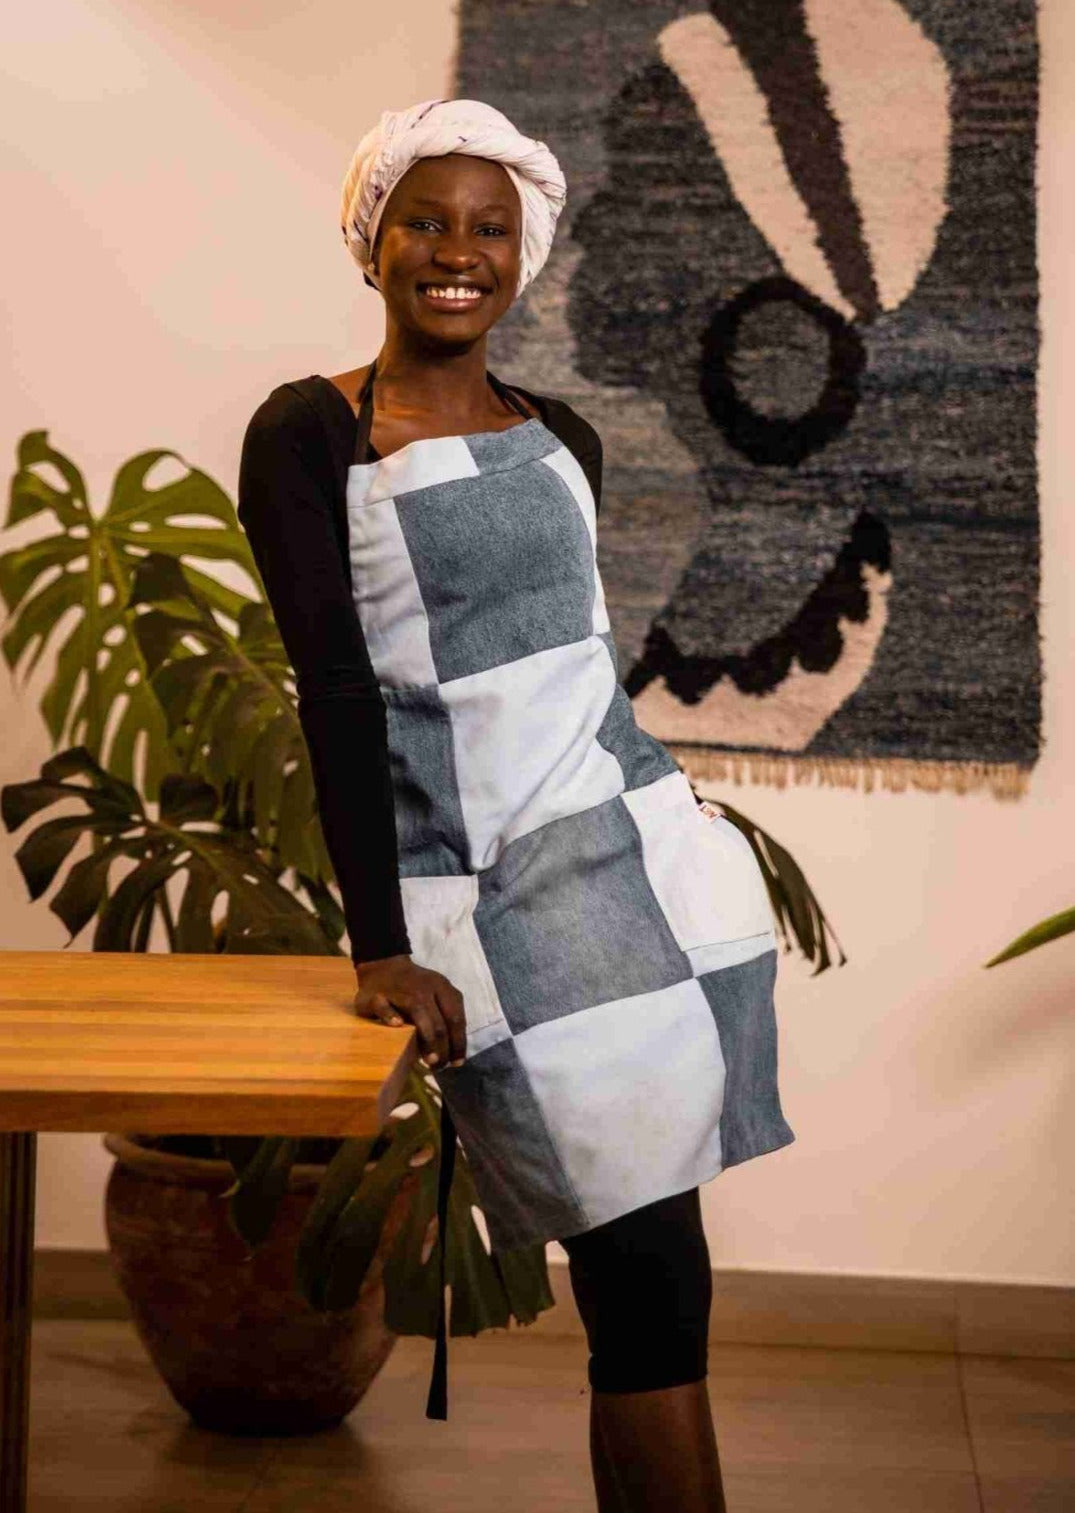 Küchenset DENIM Kombi - mikono.africa Jacken aus Kenia bunte Bomberjacke Partyjacke faire sozial nachhaltig designed in Kenia